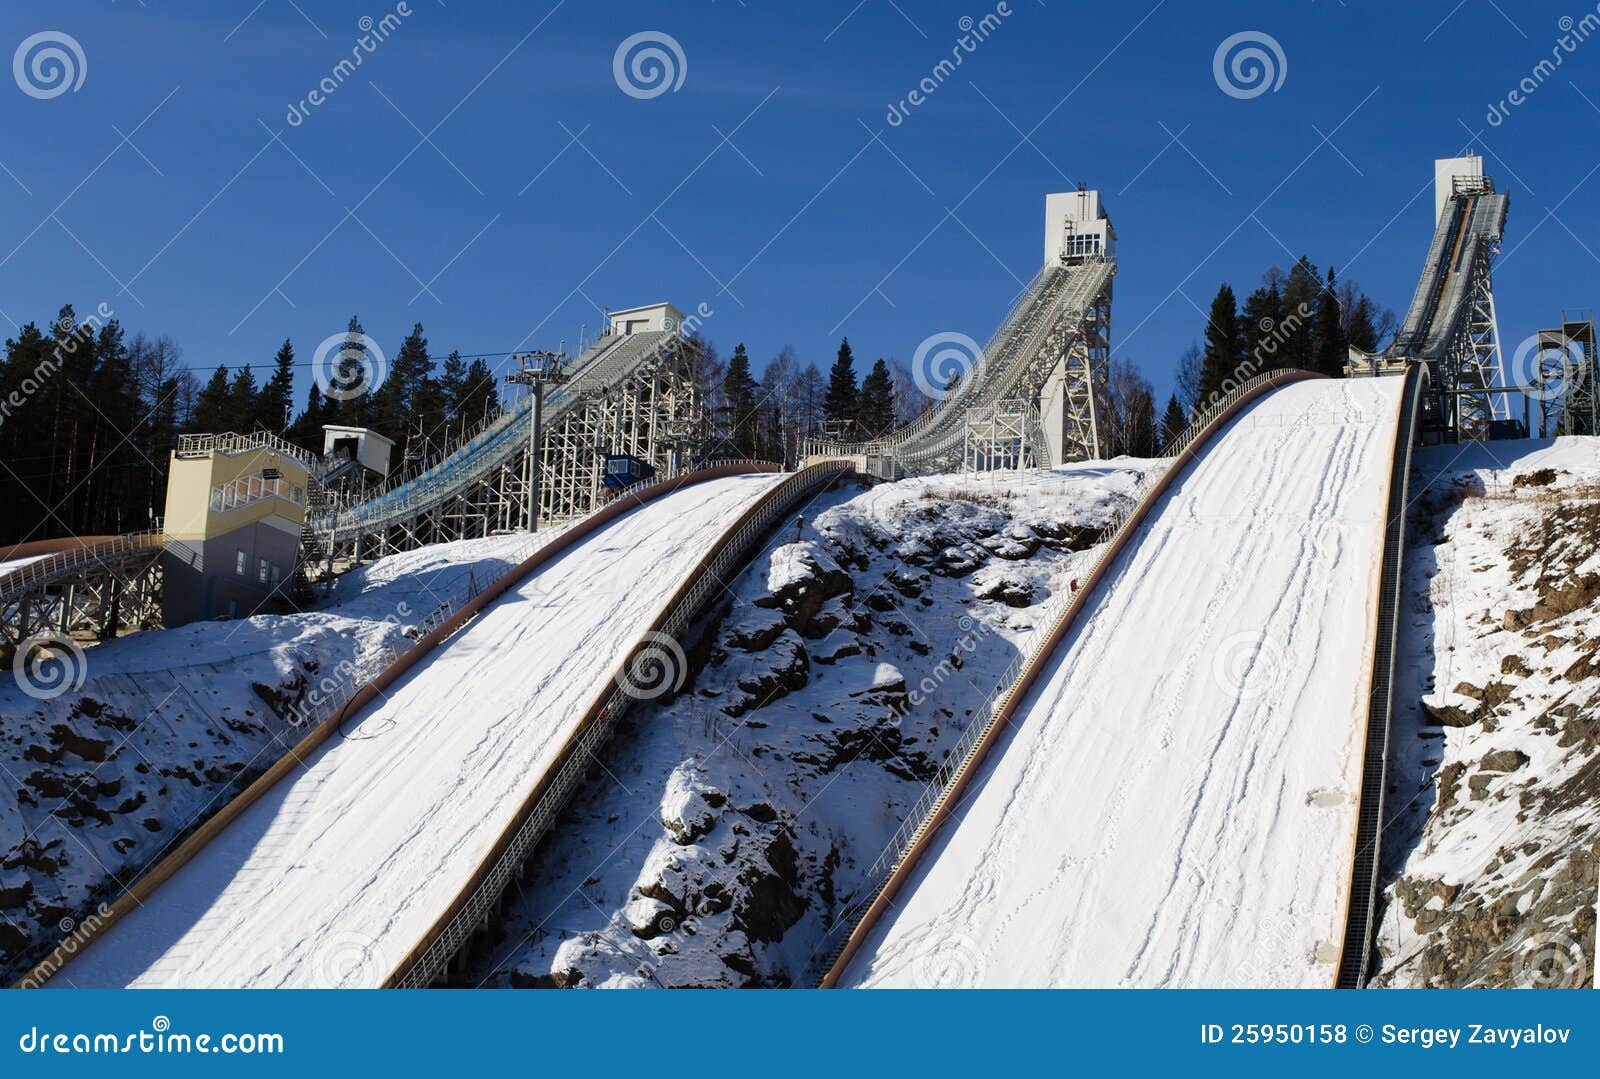 Ski Jumping Hill Royalty Free Stock Photos Image 25950158 with Ski Jumping Hill